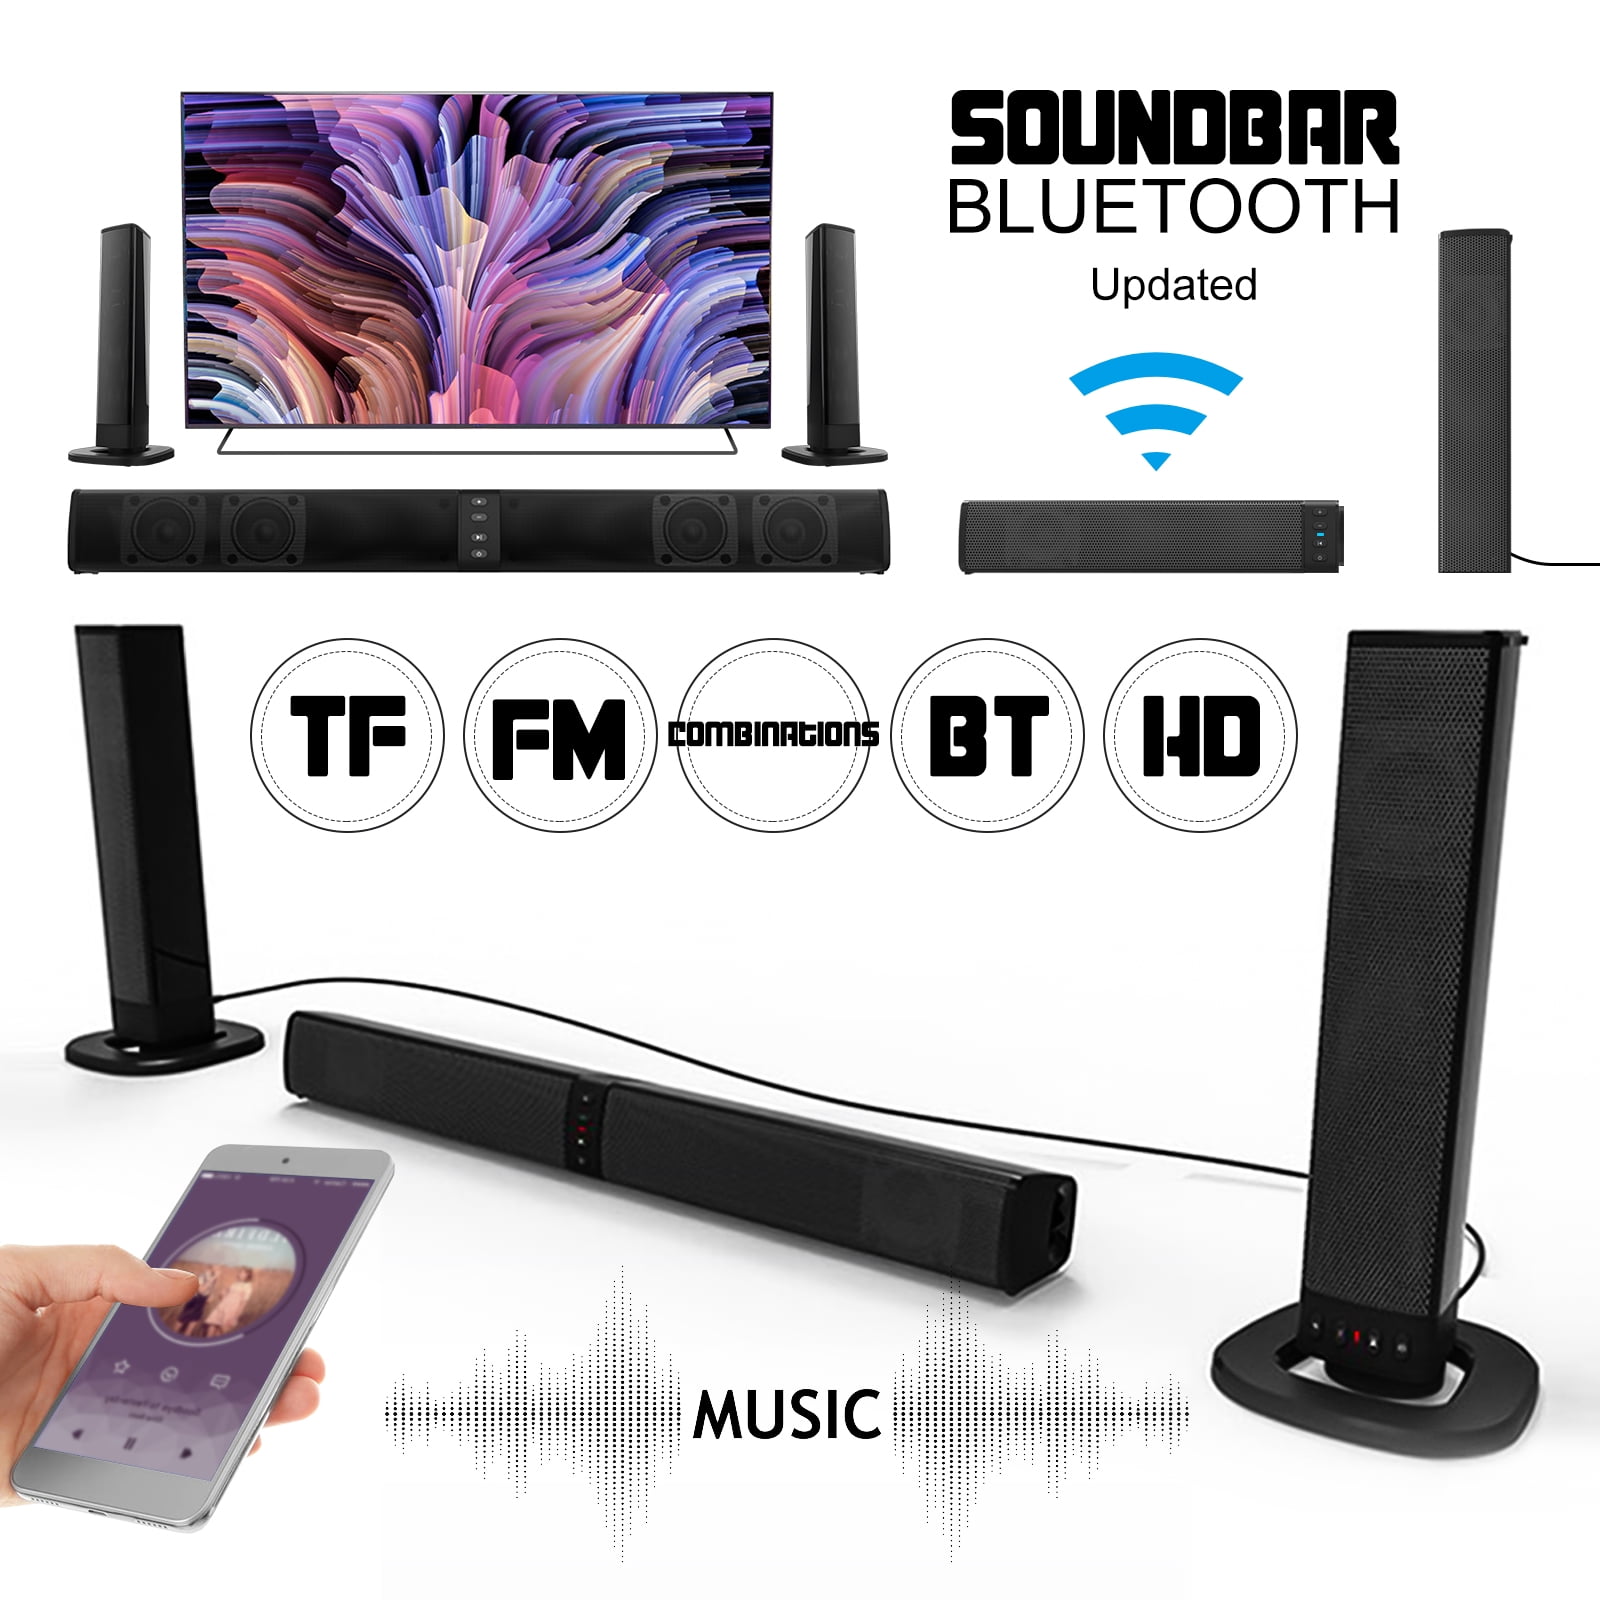 Bluetooth Surround Sound Soundbar Wired and Wireless Home Theater Speaker System 